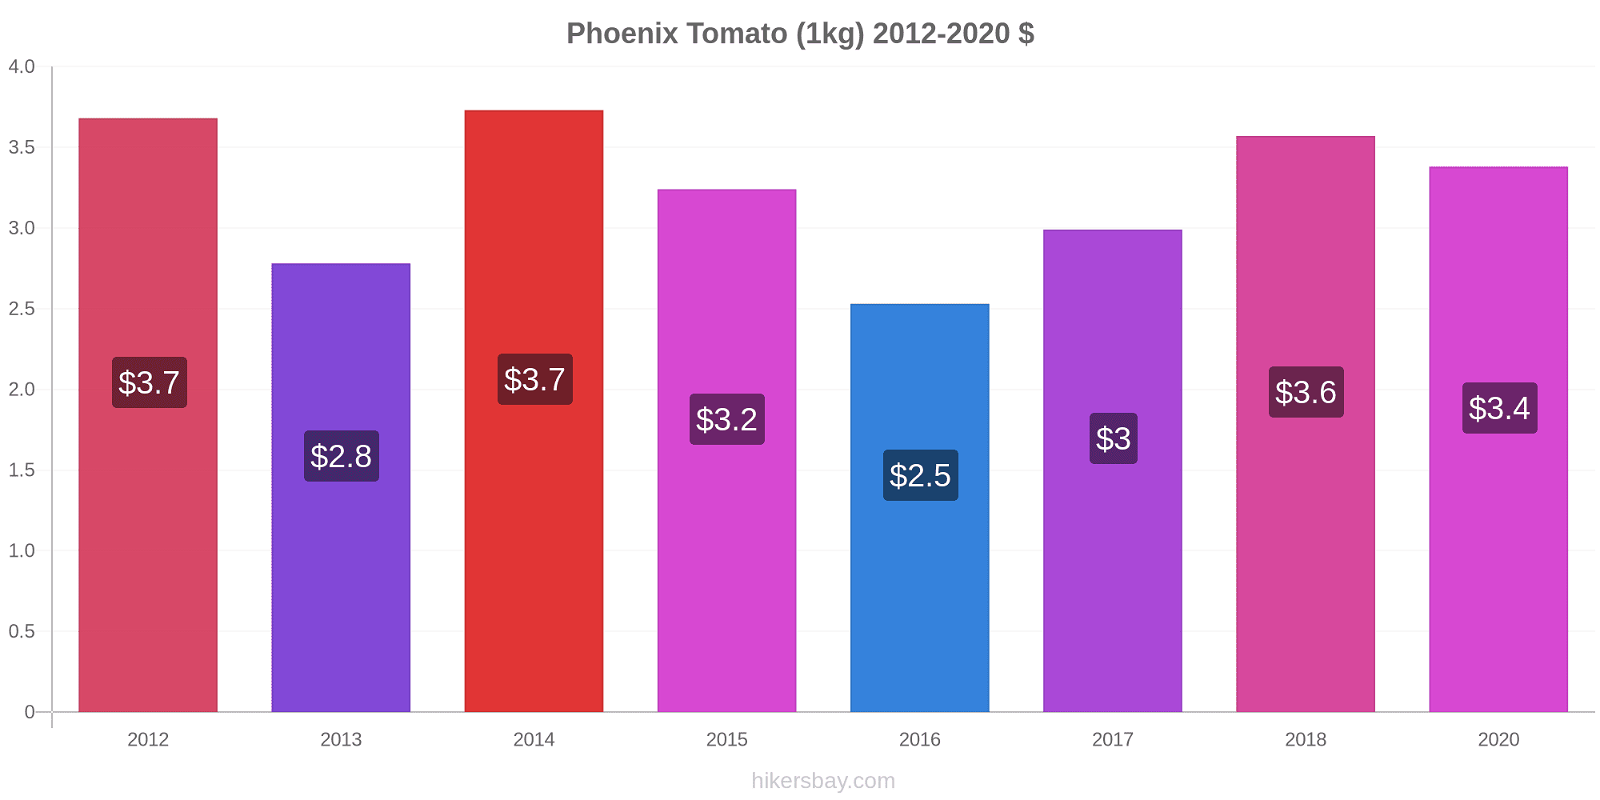 Phoenix price changes Tomato (1kg) hikersbay.com